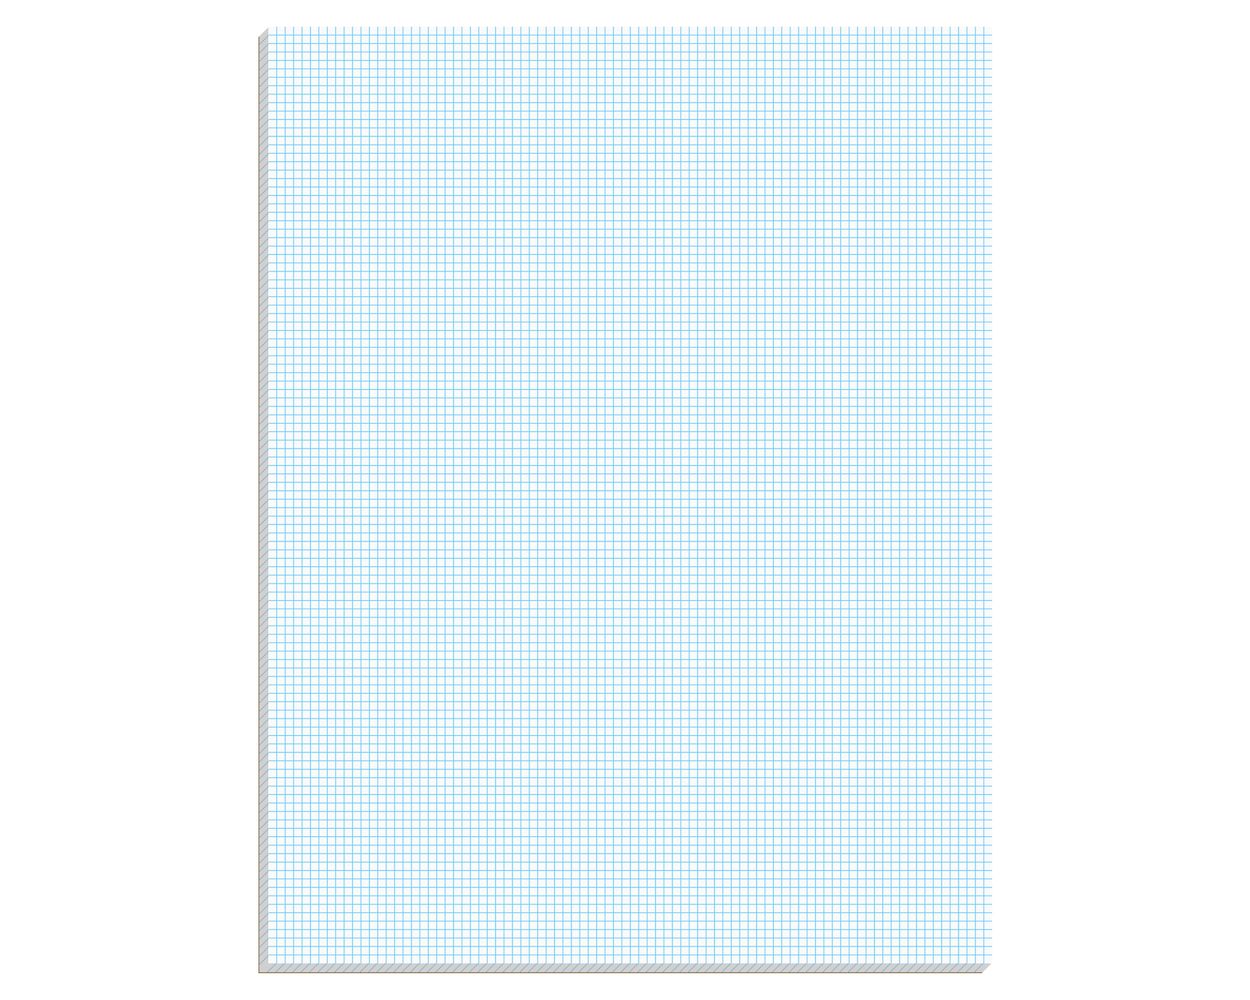 Details about   2 Tops 8 Square/inch Quadrille Pads 100 Sheets 20 Lb Quad Ruled Graph Paper 